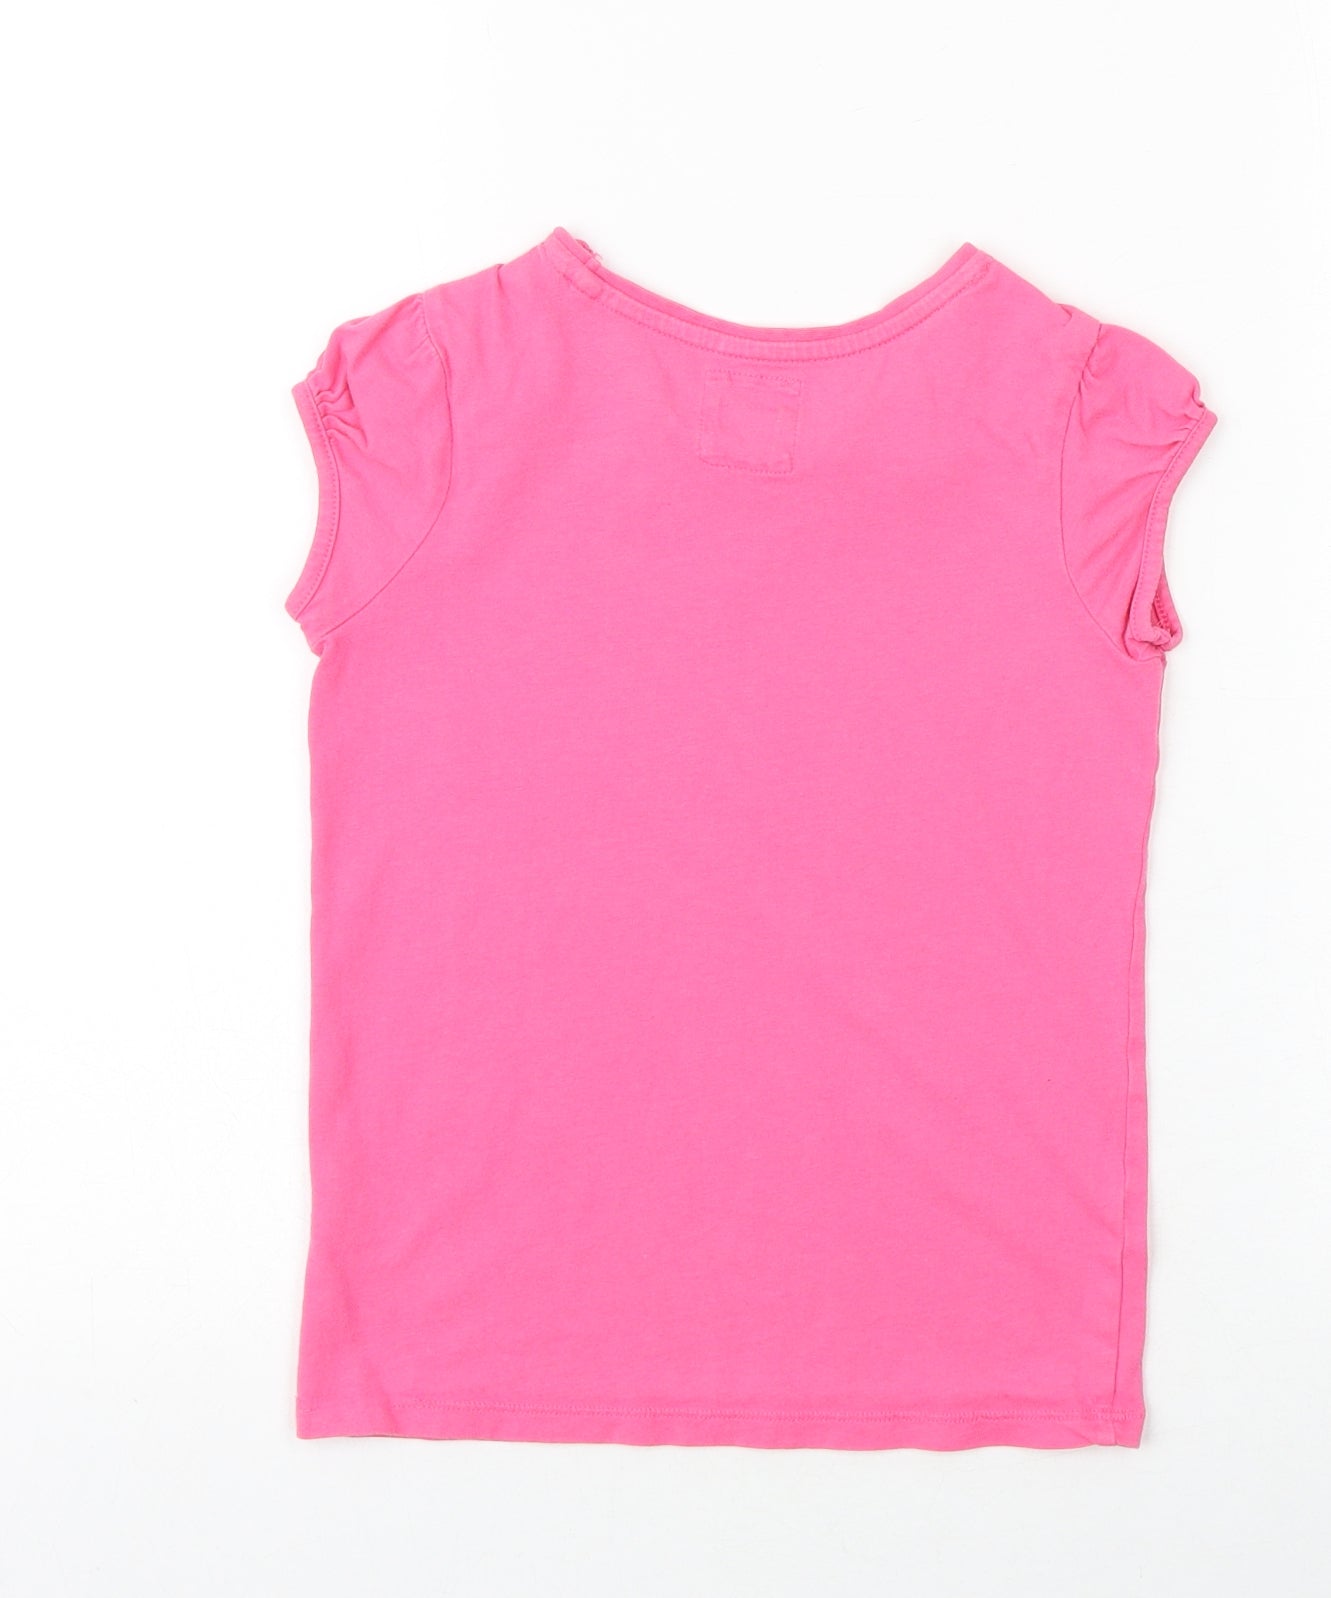 TU Girls Pink 100% Cotton Basic T-Shirt Size 8 Years Round Neck Pullover